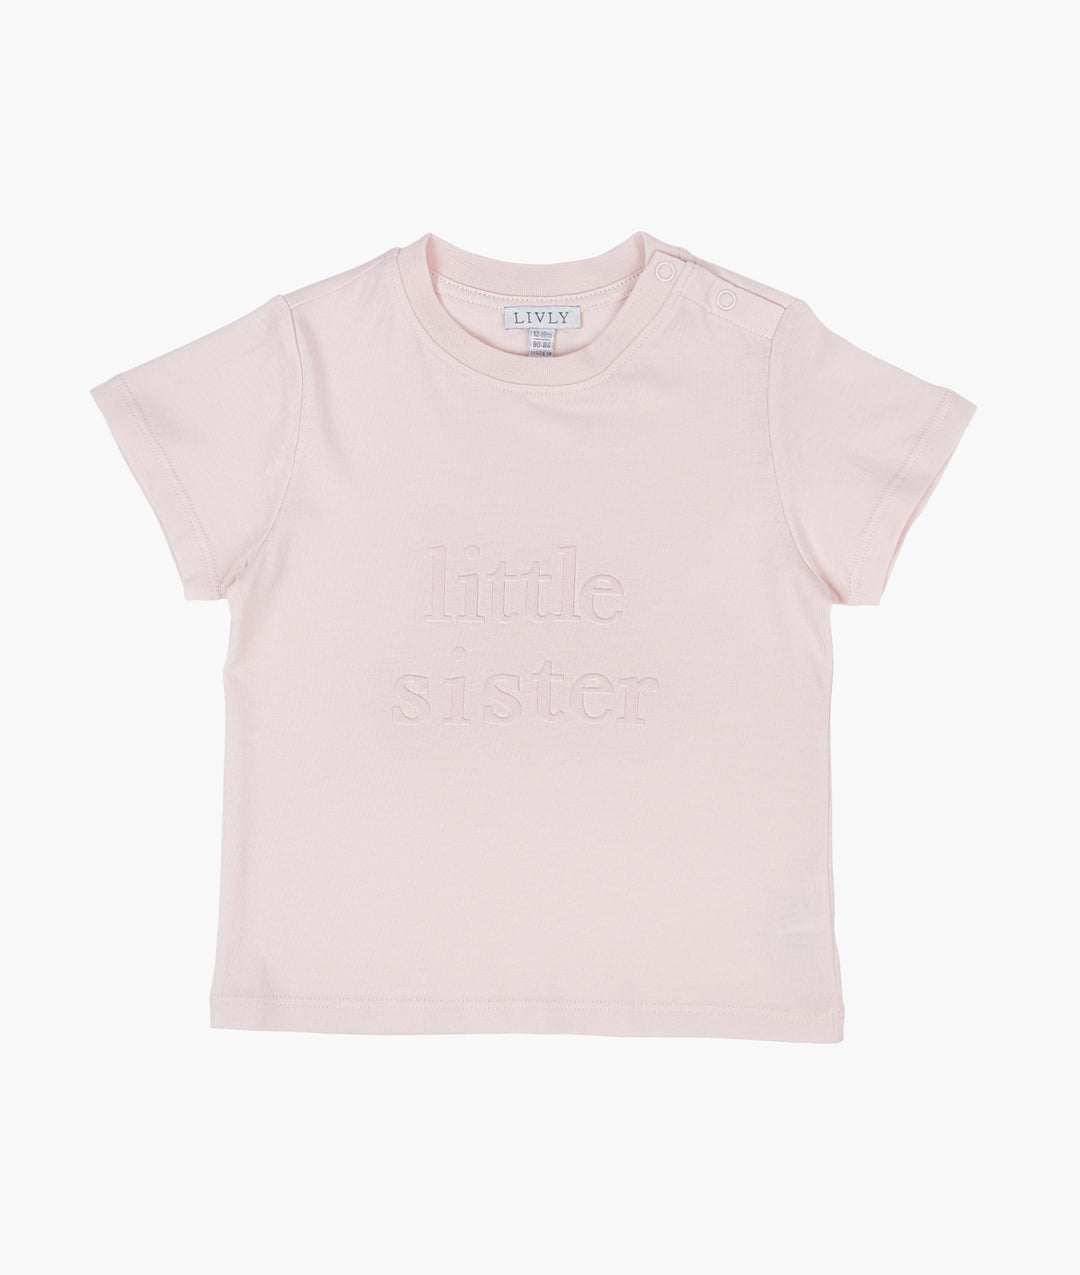 Little Sister T-shirt